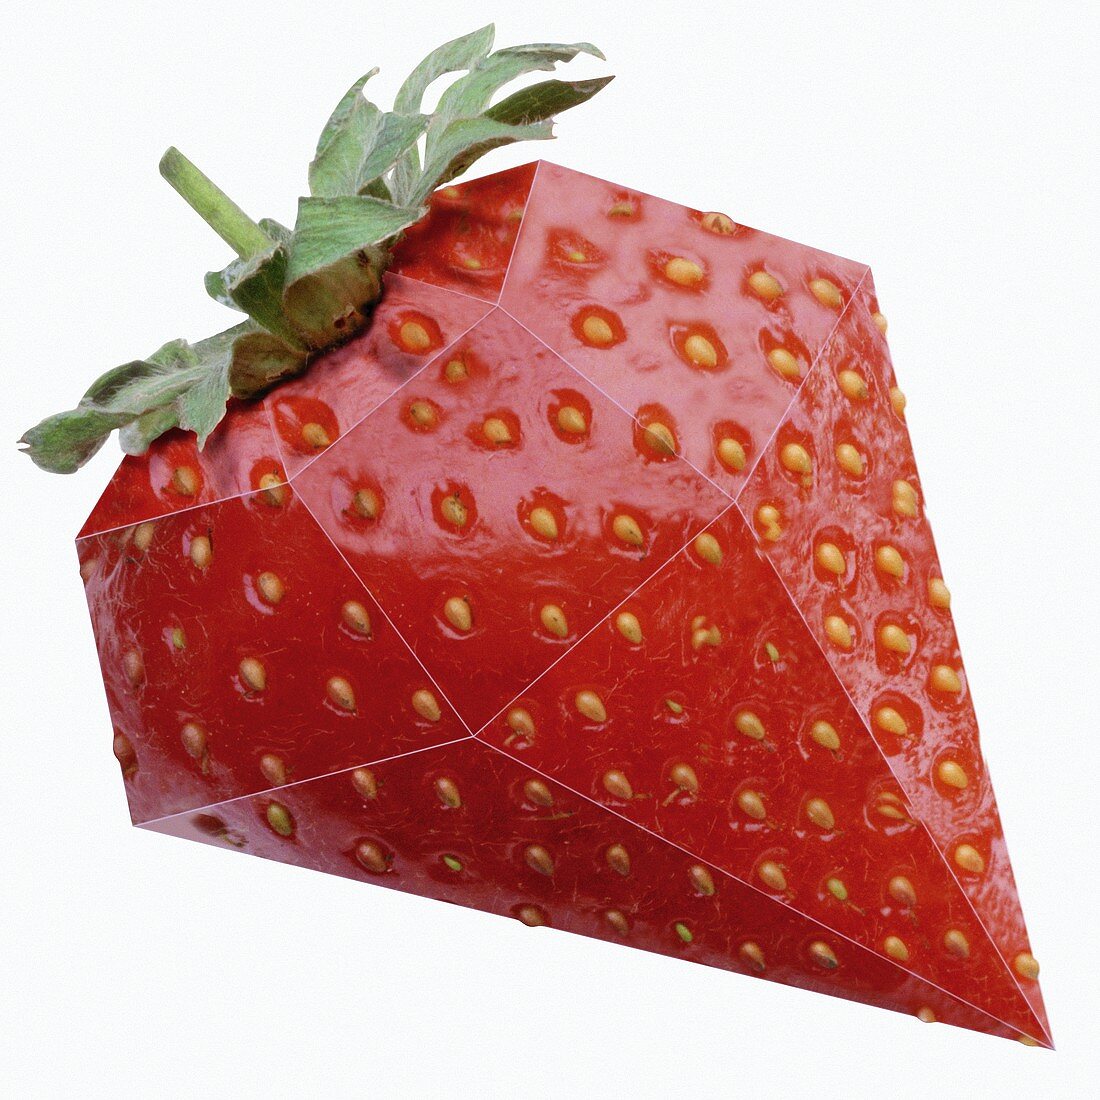 A paper strawberry